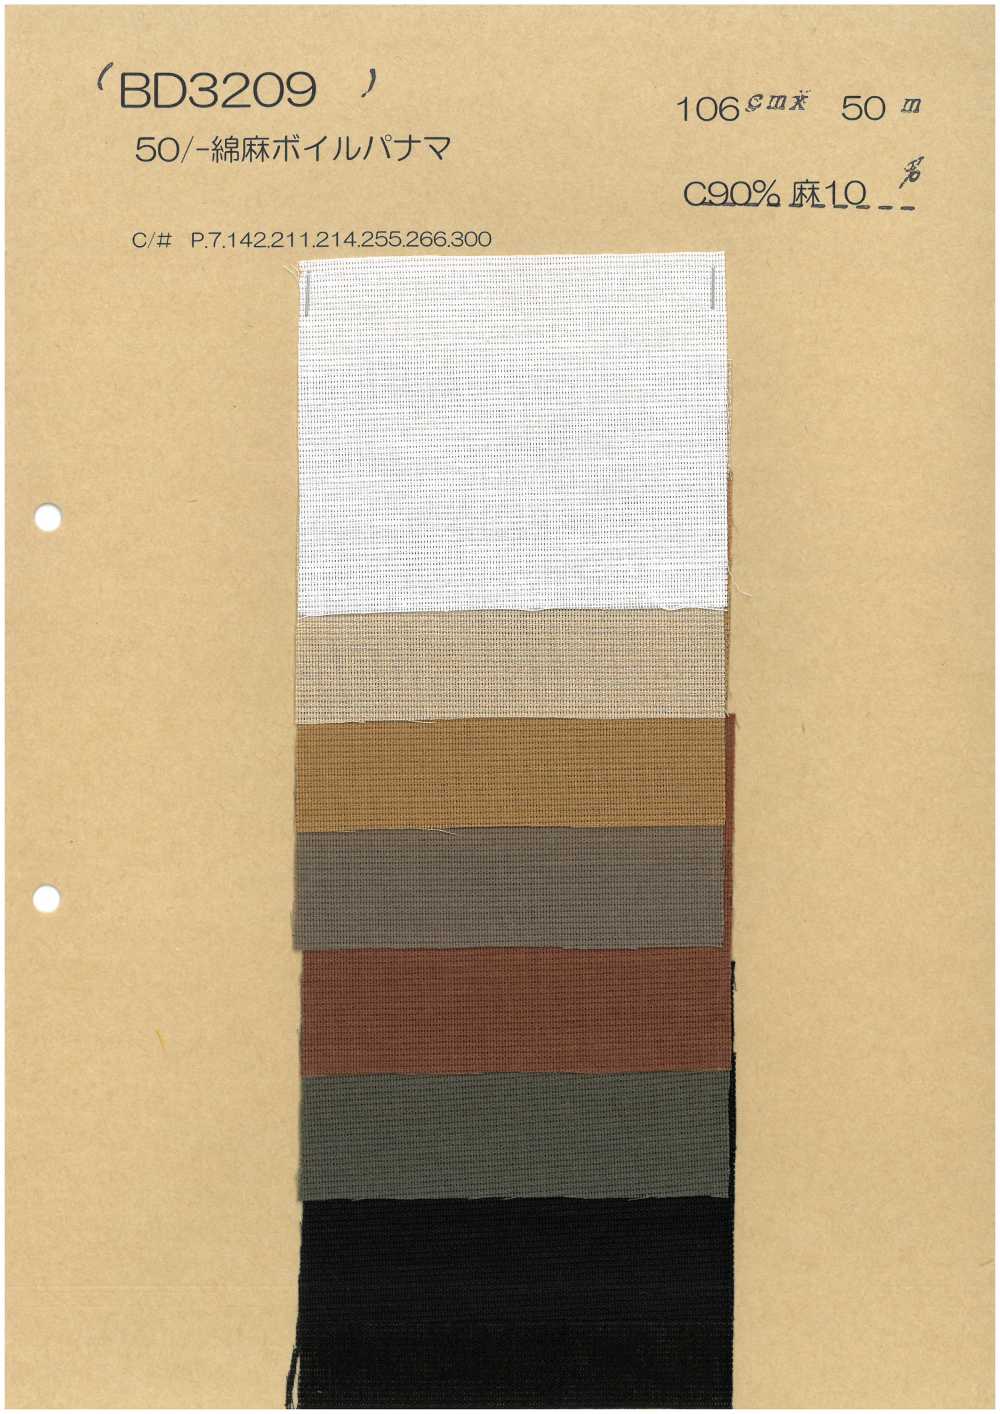 BD3209 [OUTLET] Baumwolle Leinen Panamaboiru[Textilgewebe] COSMO TEXTILE